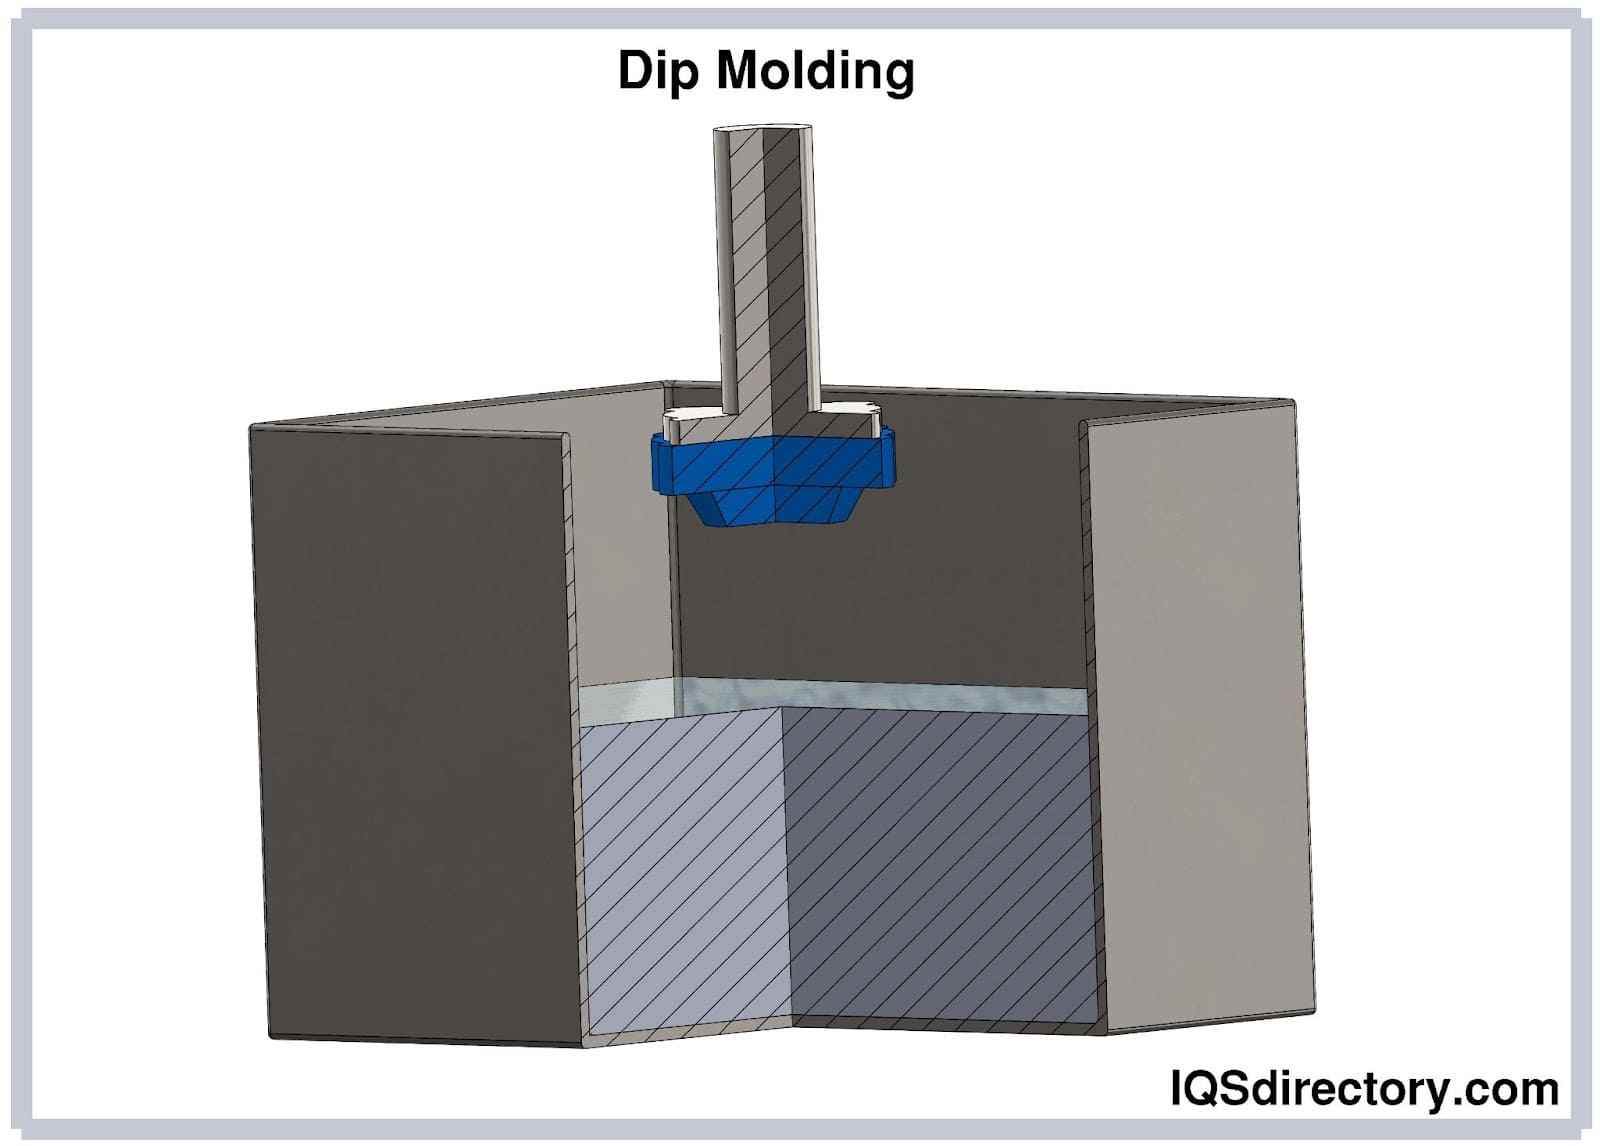 dip molding